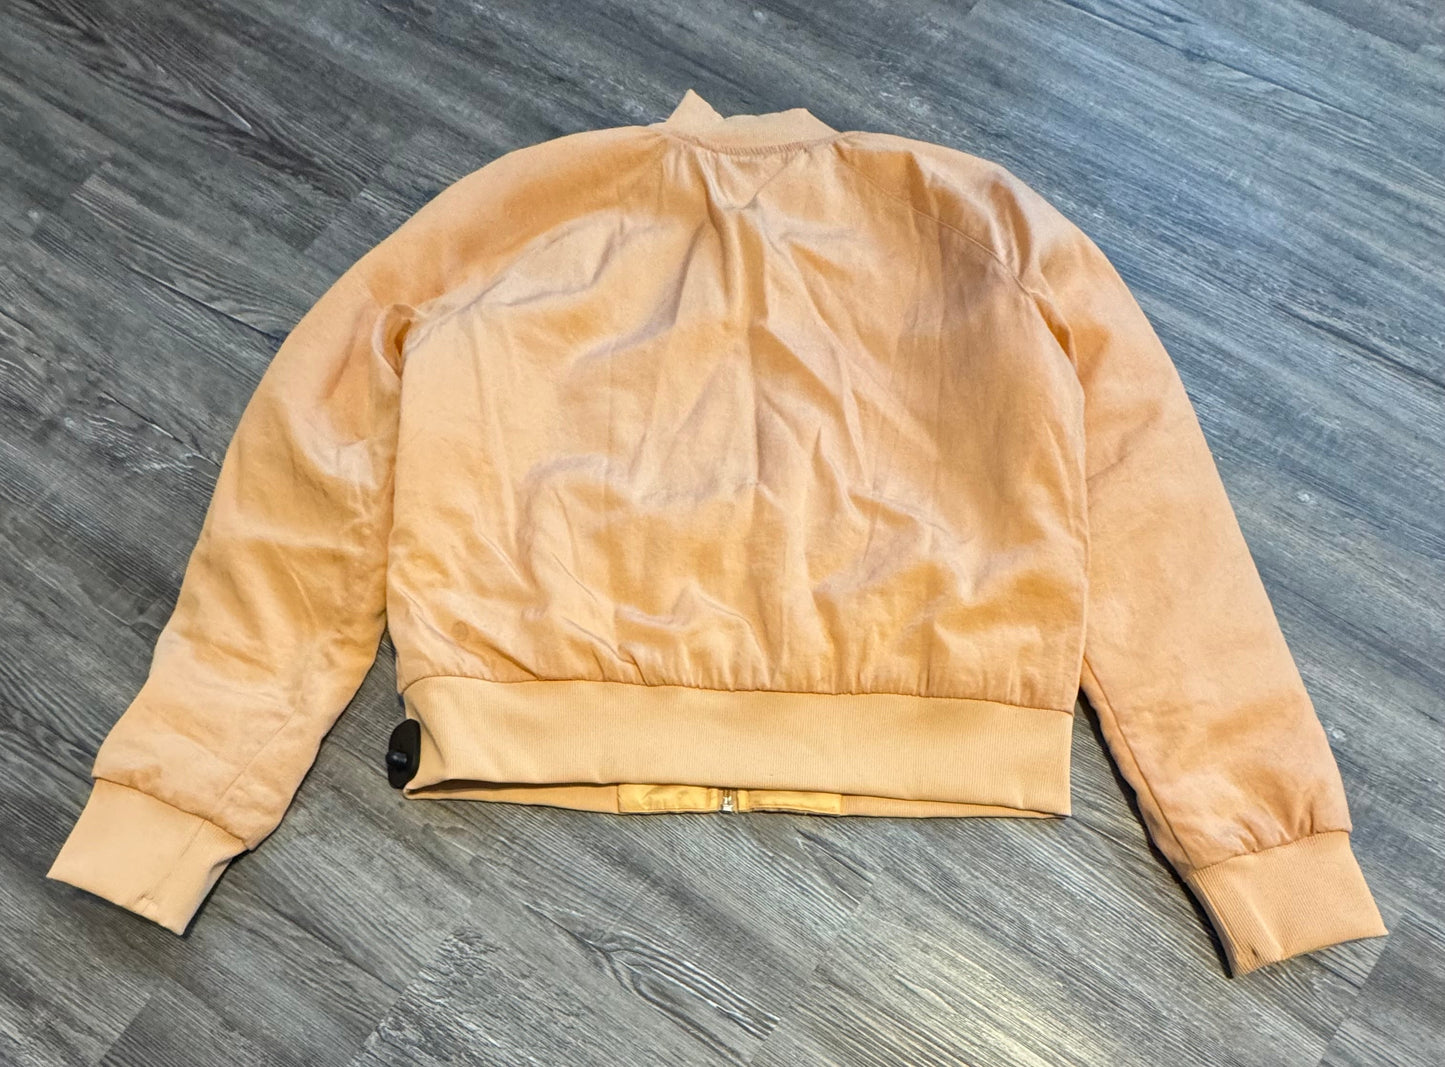 Jacket Other By Lululemon  Size: 10